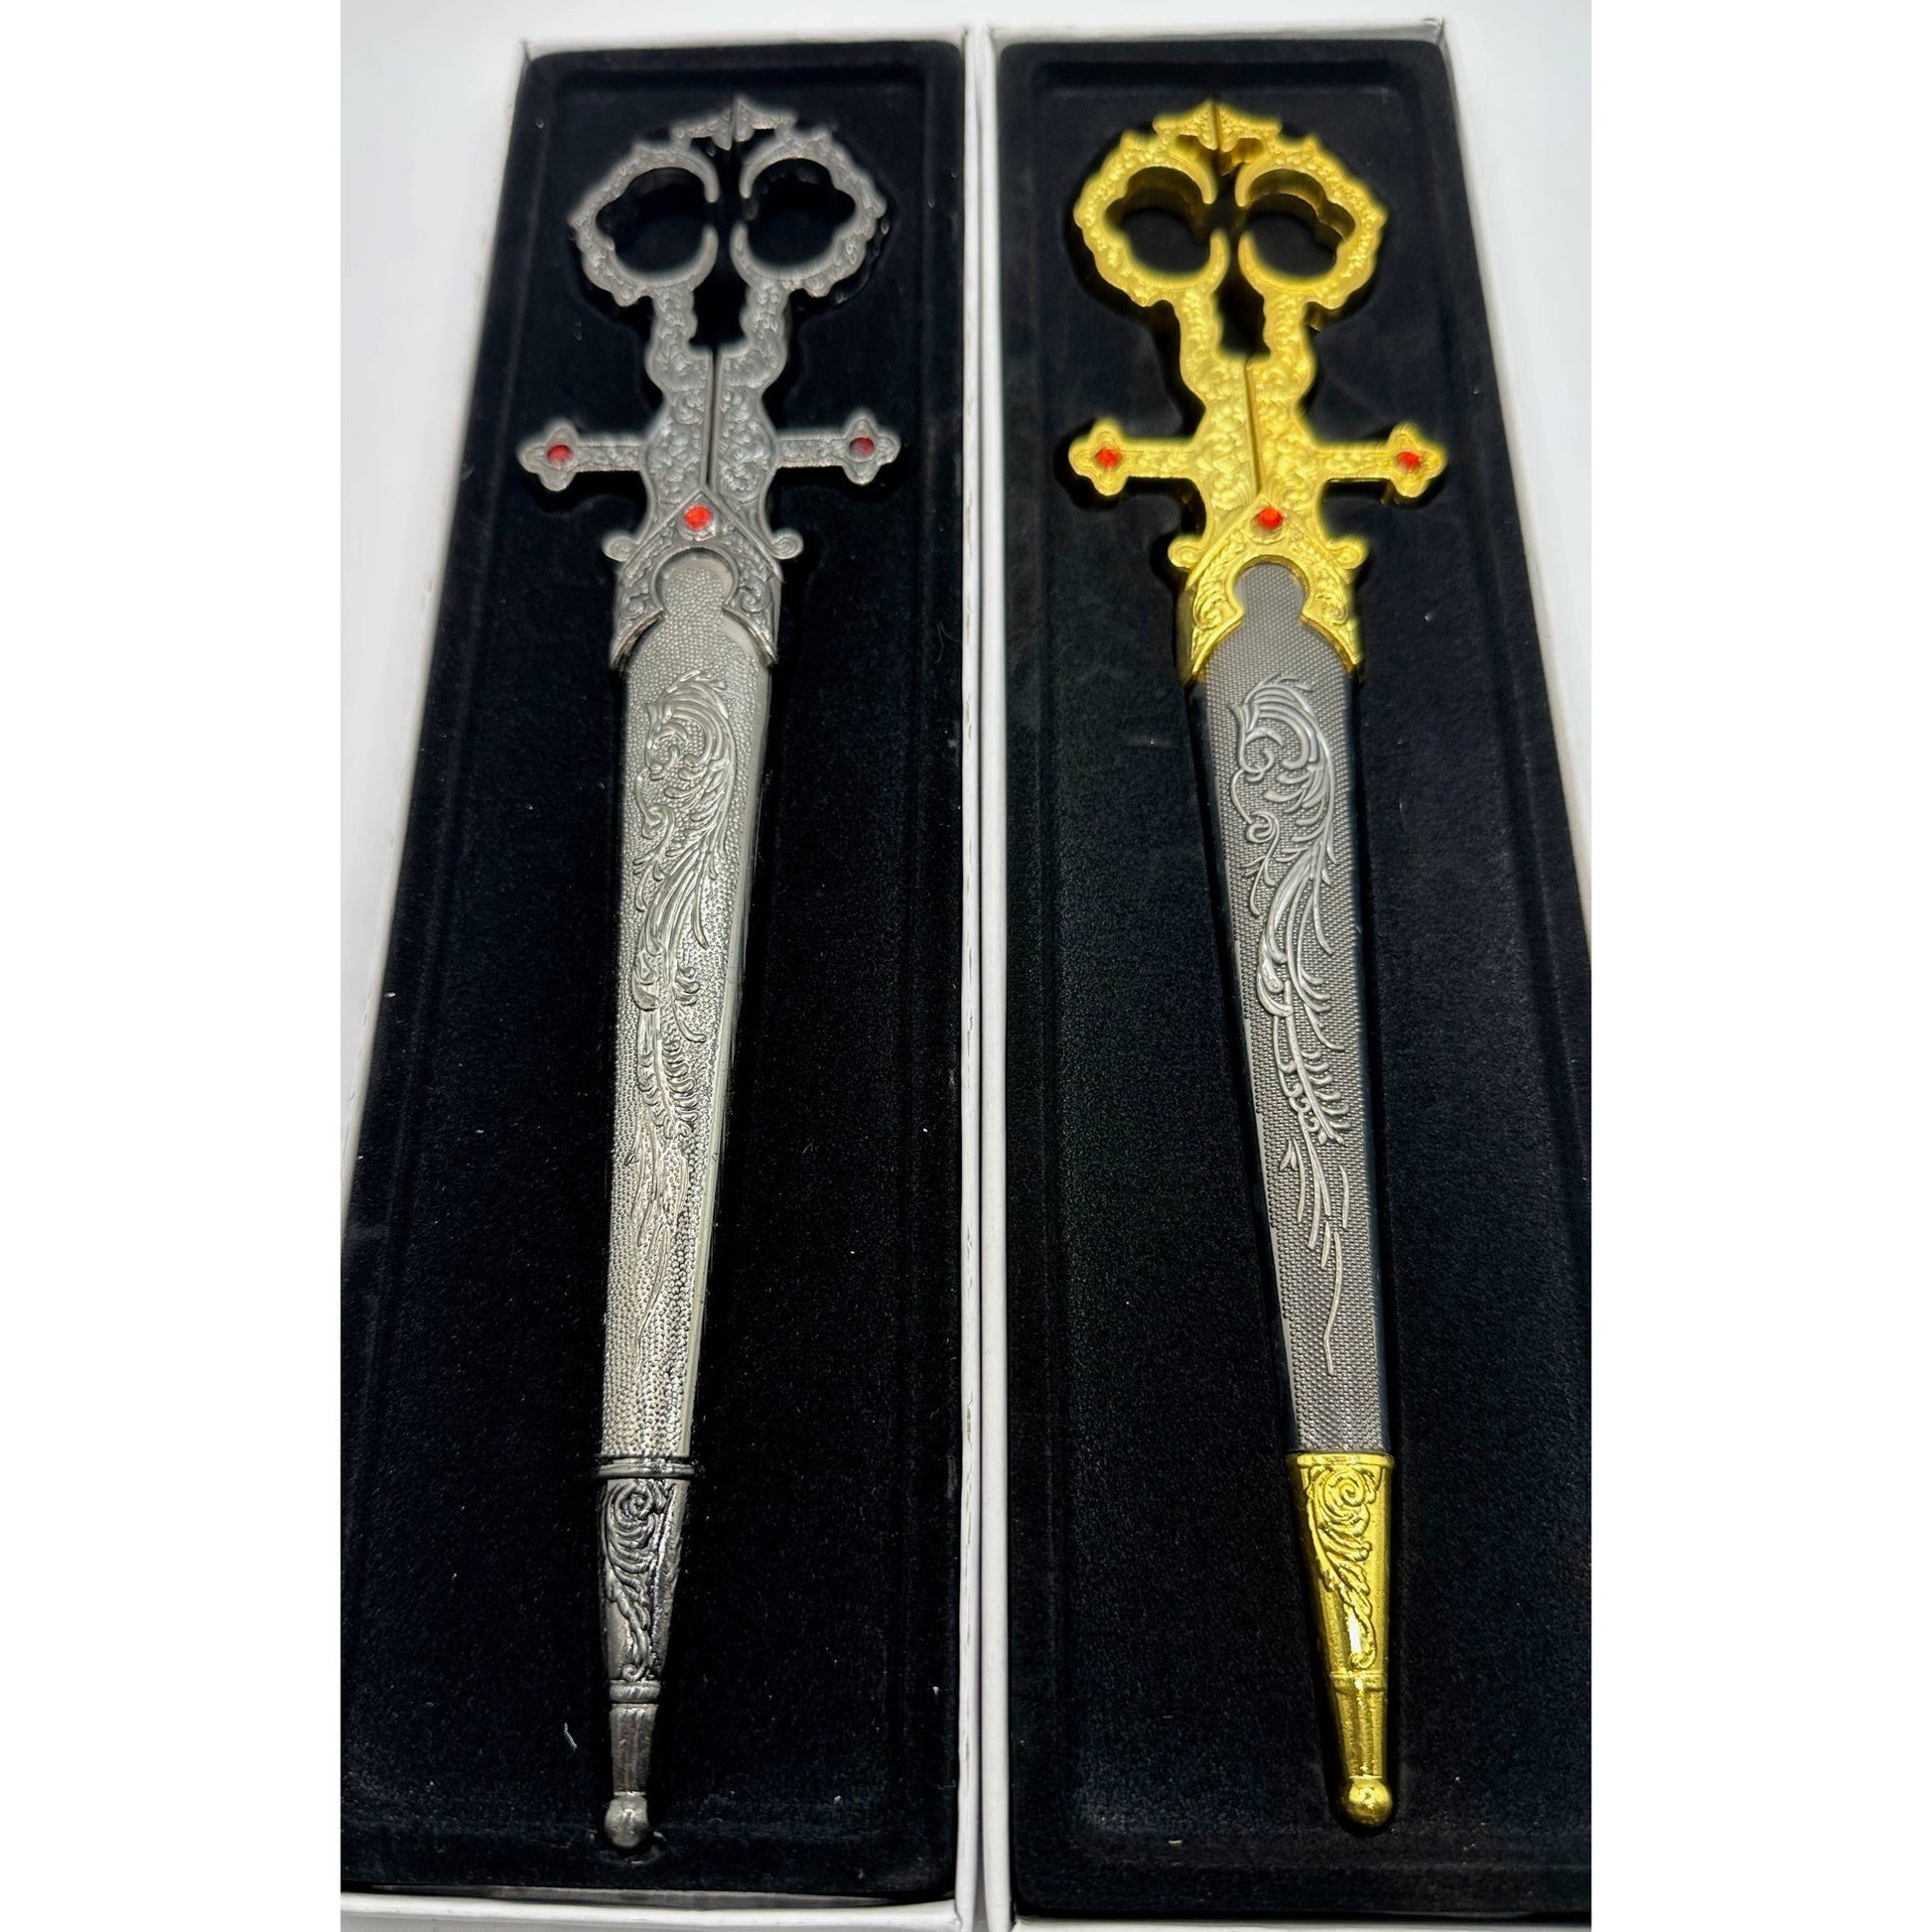 Silver Renaissance Scissors with Scissors Holder | Vintage Sword-like